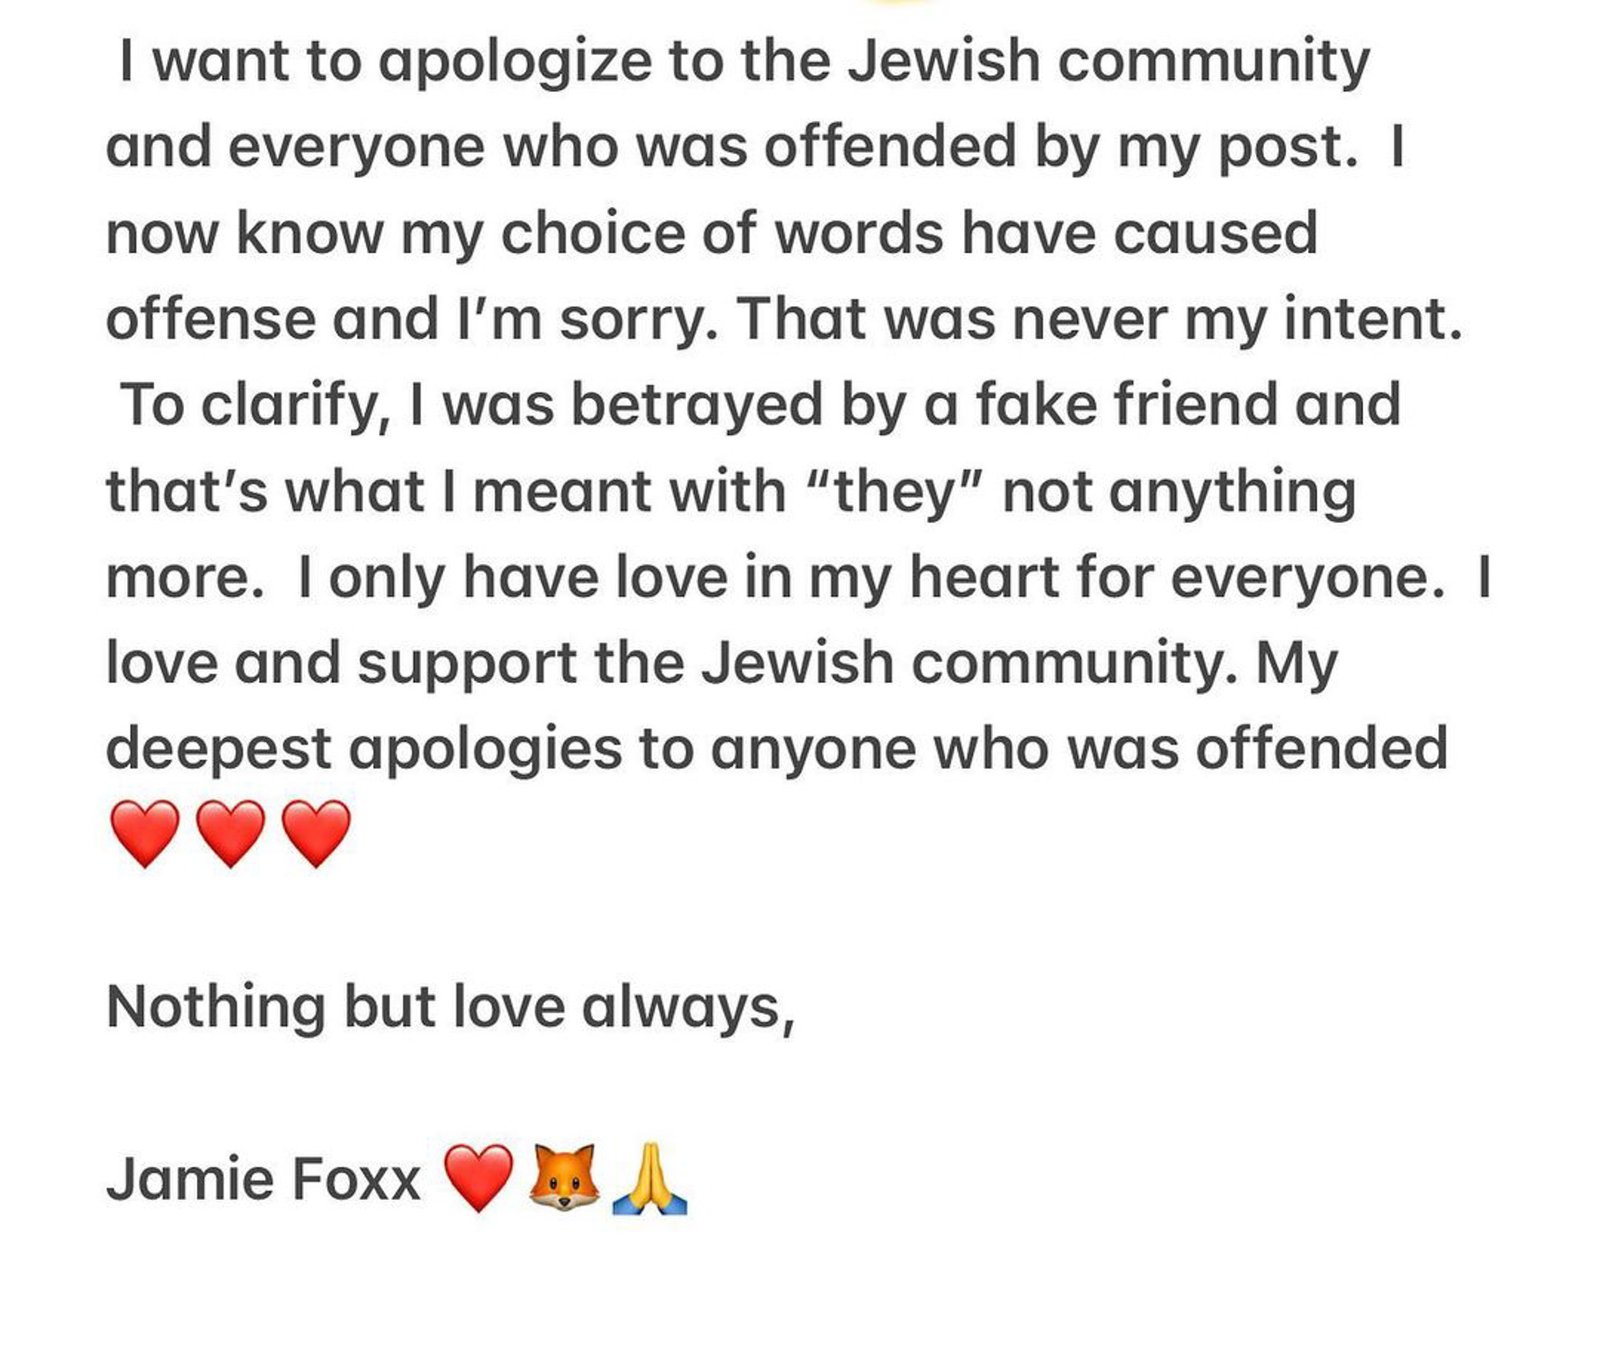 Jamie Foxx's Instagram post.